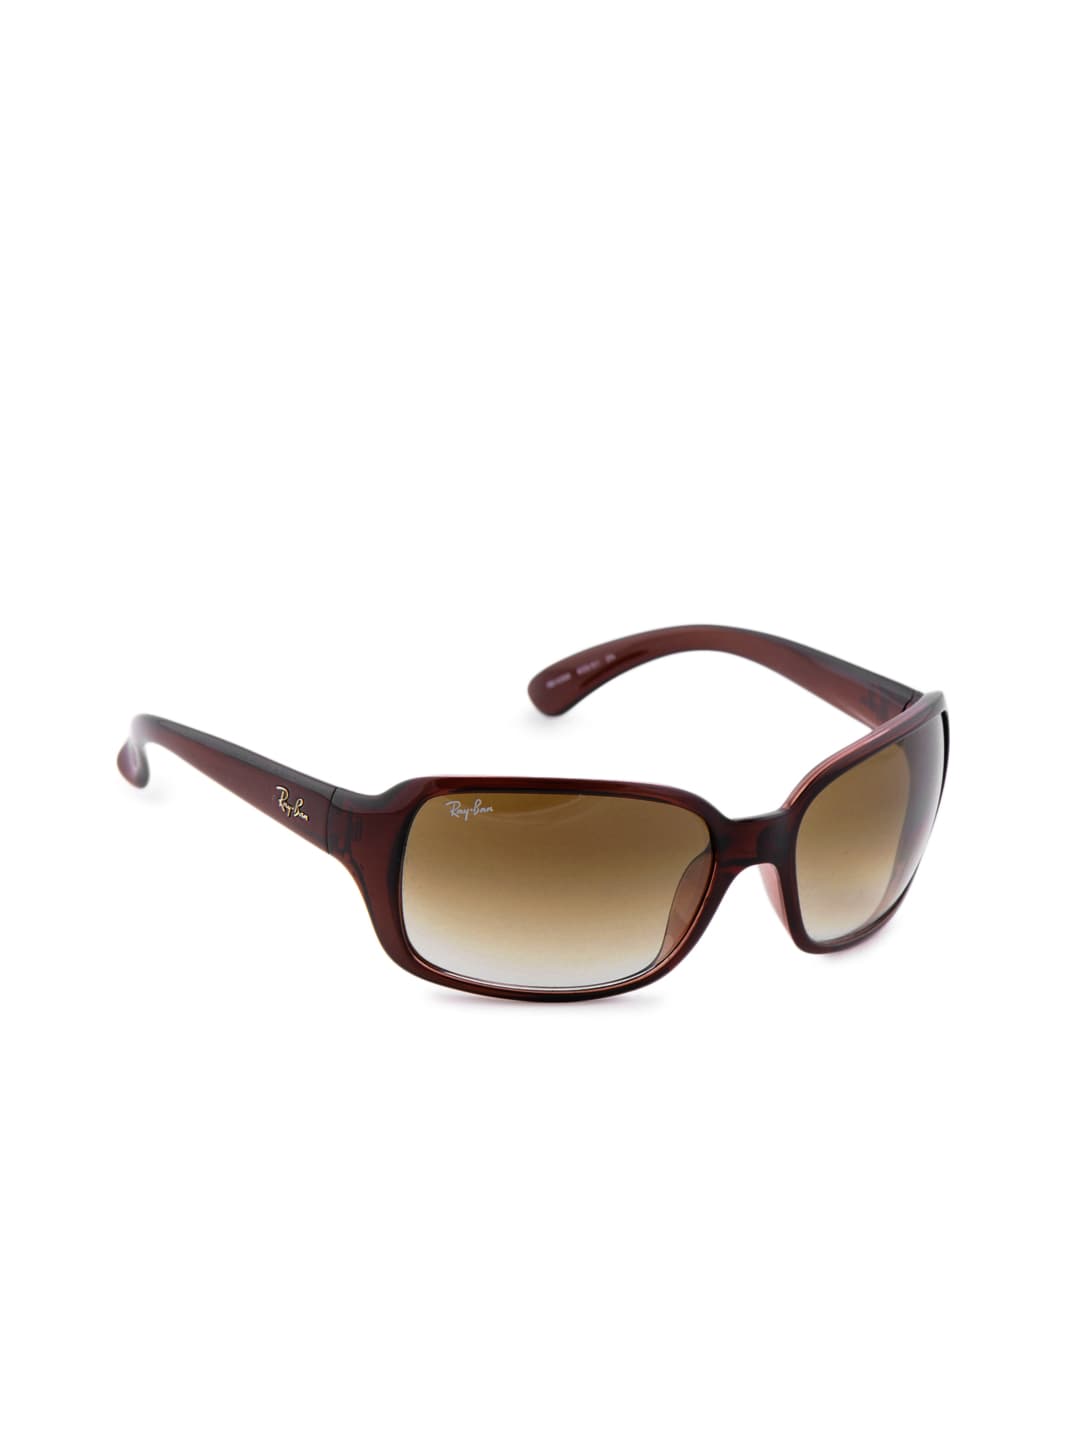 Ray-Ban Unisex High Street Brown Sunglasses